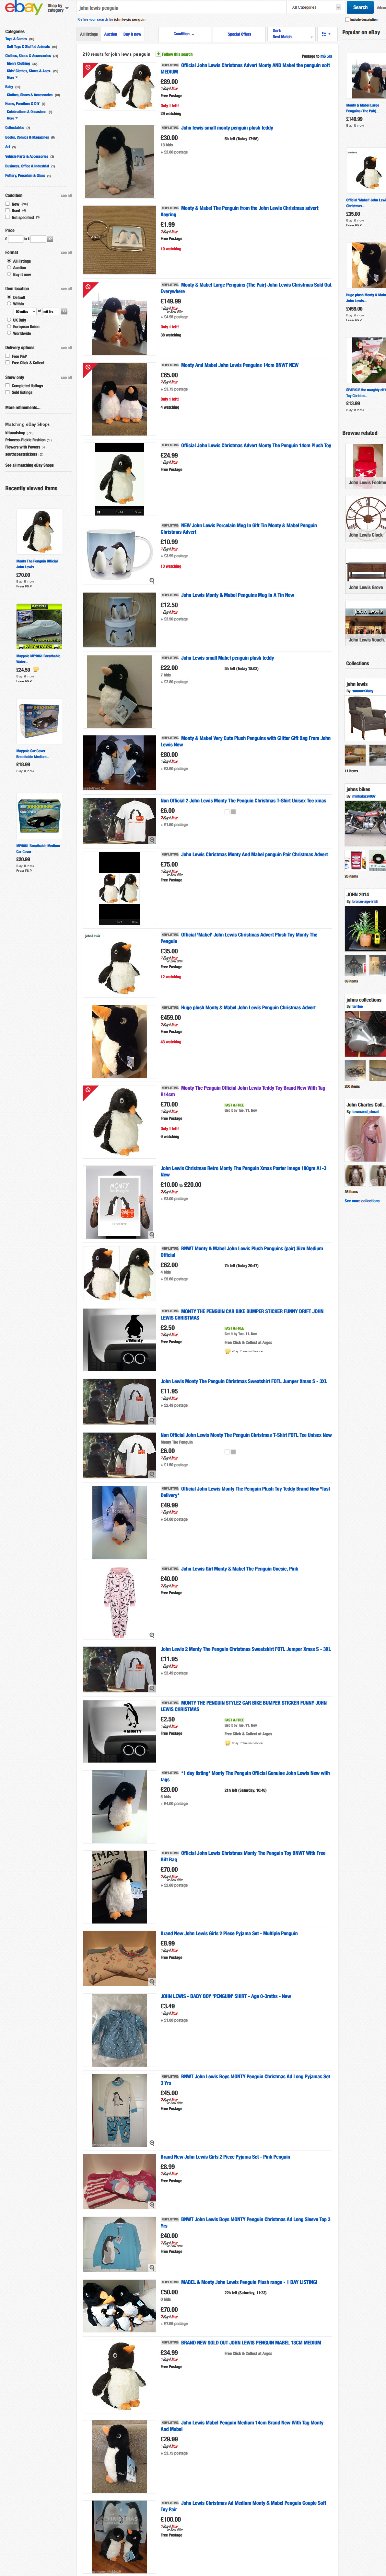 Mabel the penguin causing sale frenzy on ebay.co.uk